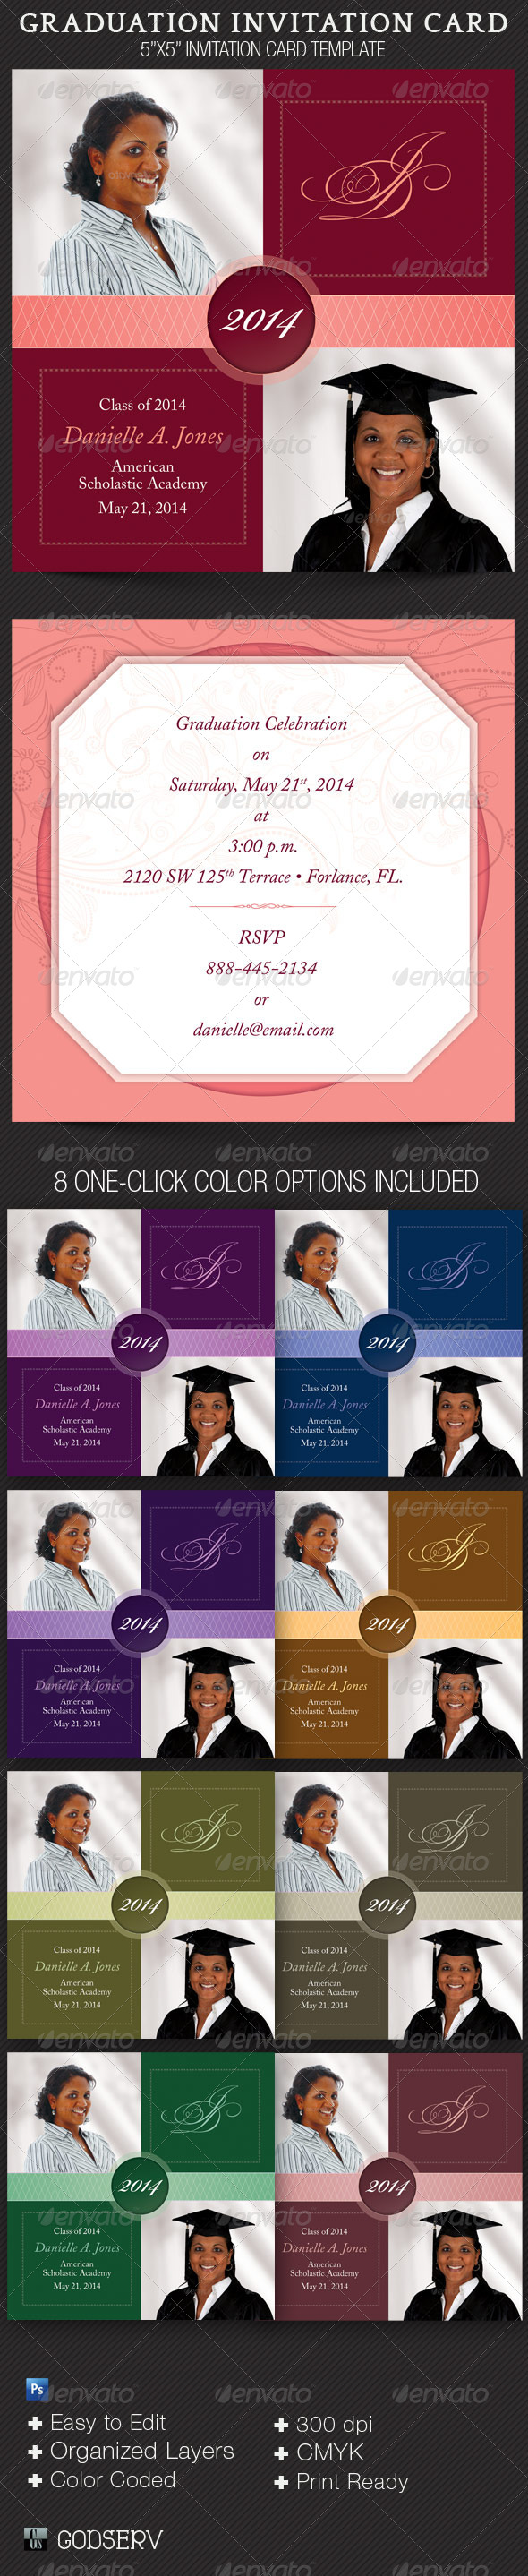 Graduation-Invitation-Card-Template-Preview